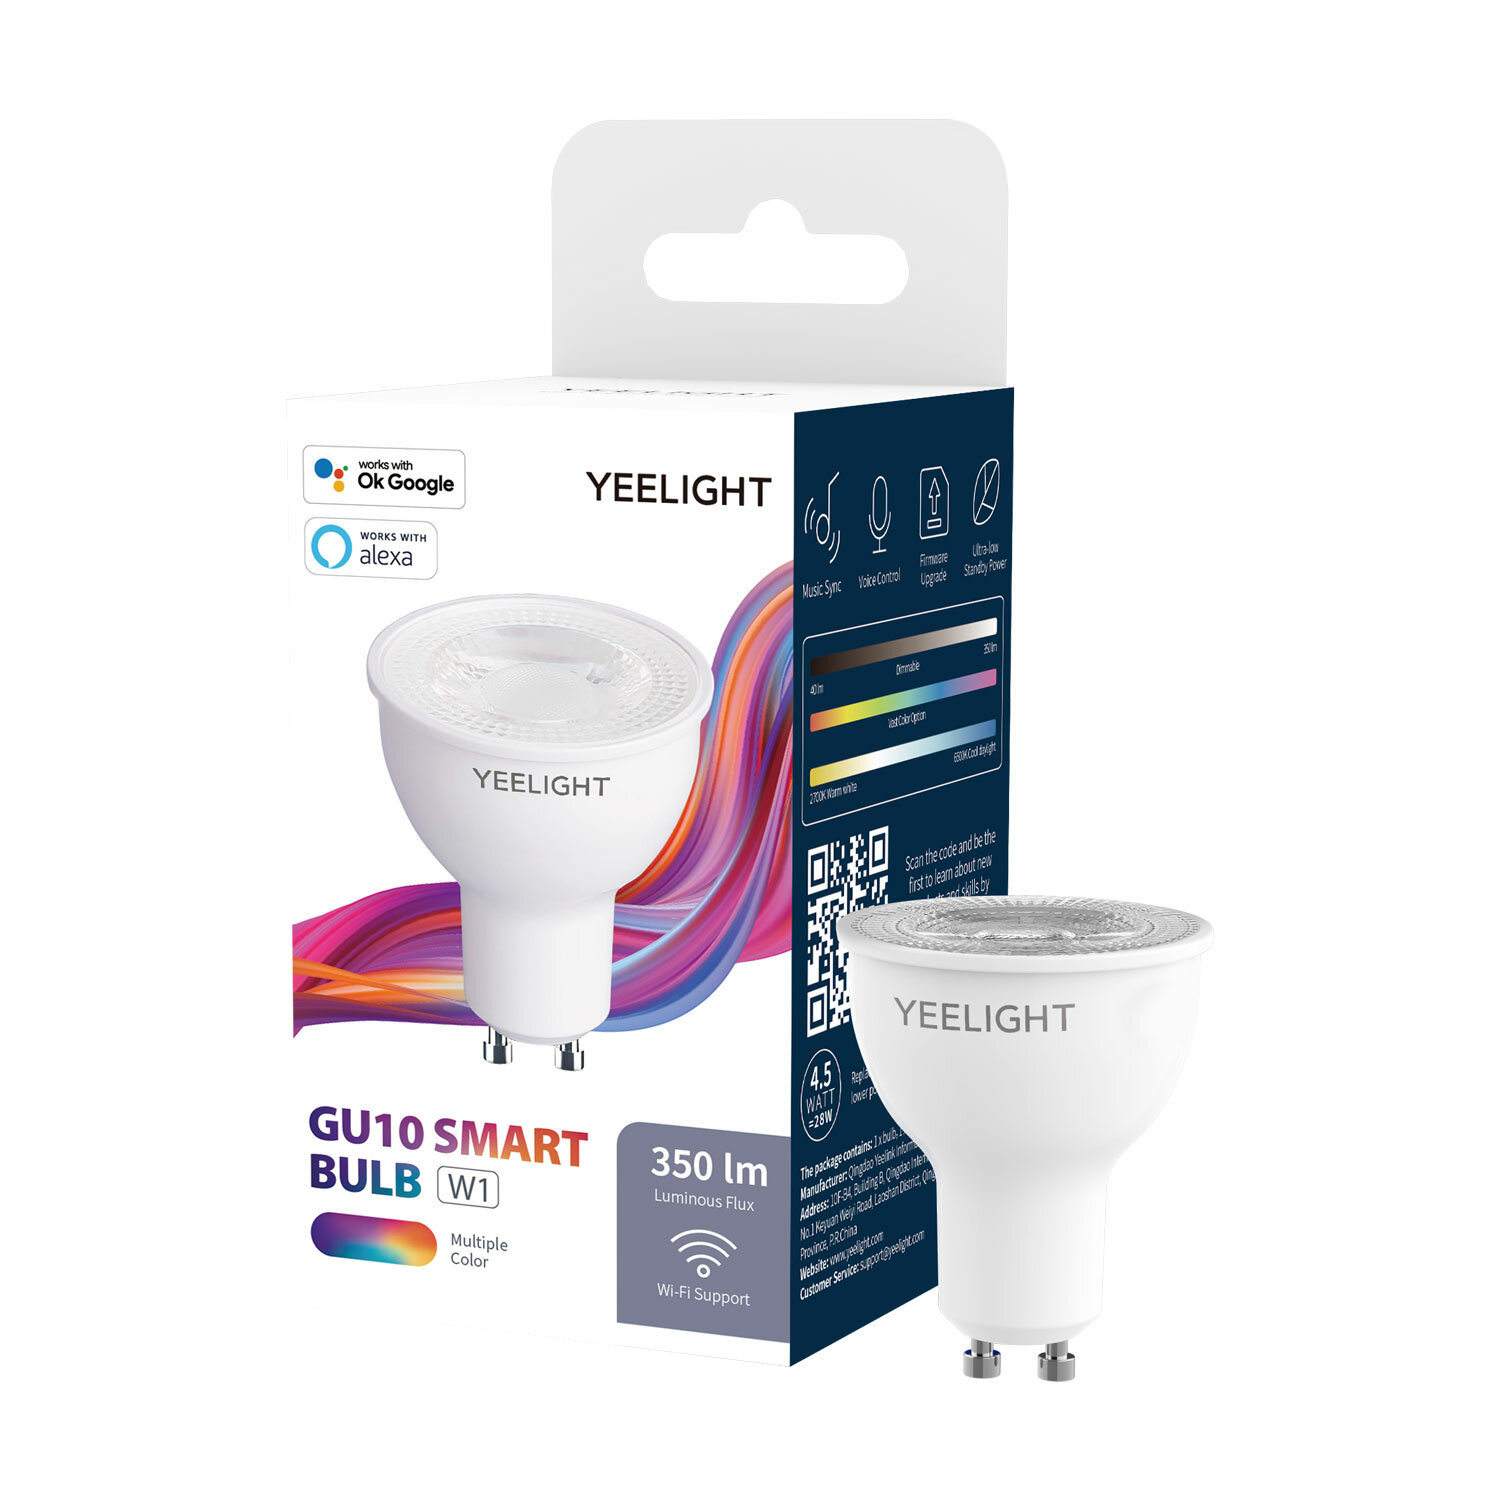 

Yeelight YLDP004-A GU10 Colorful Smart LED Bulb W1 Game Music Sync APP Voice Control Work Yeelight APP Google Assistant